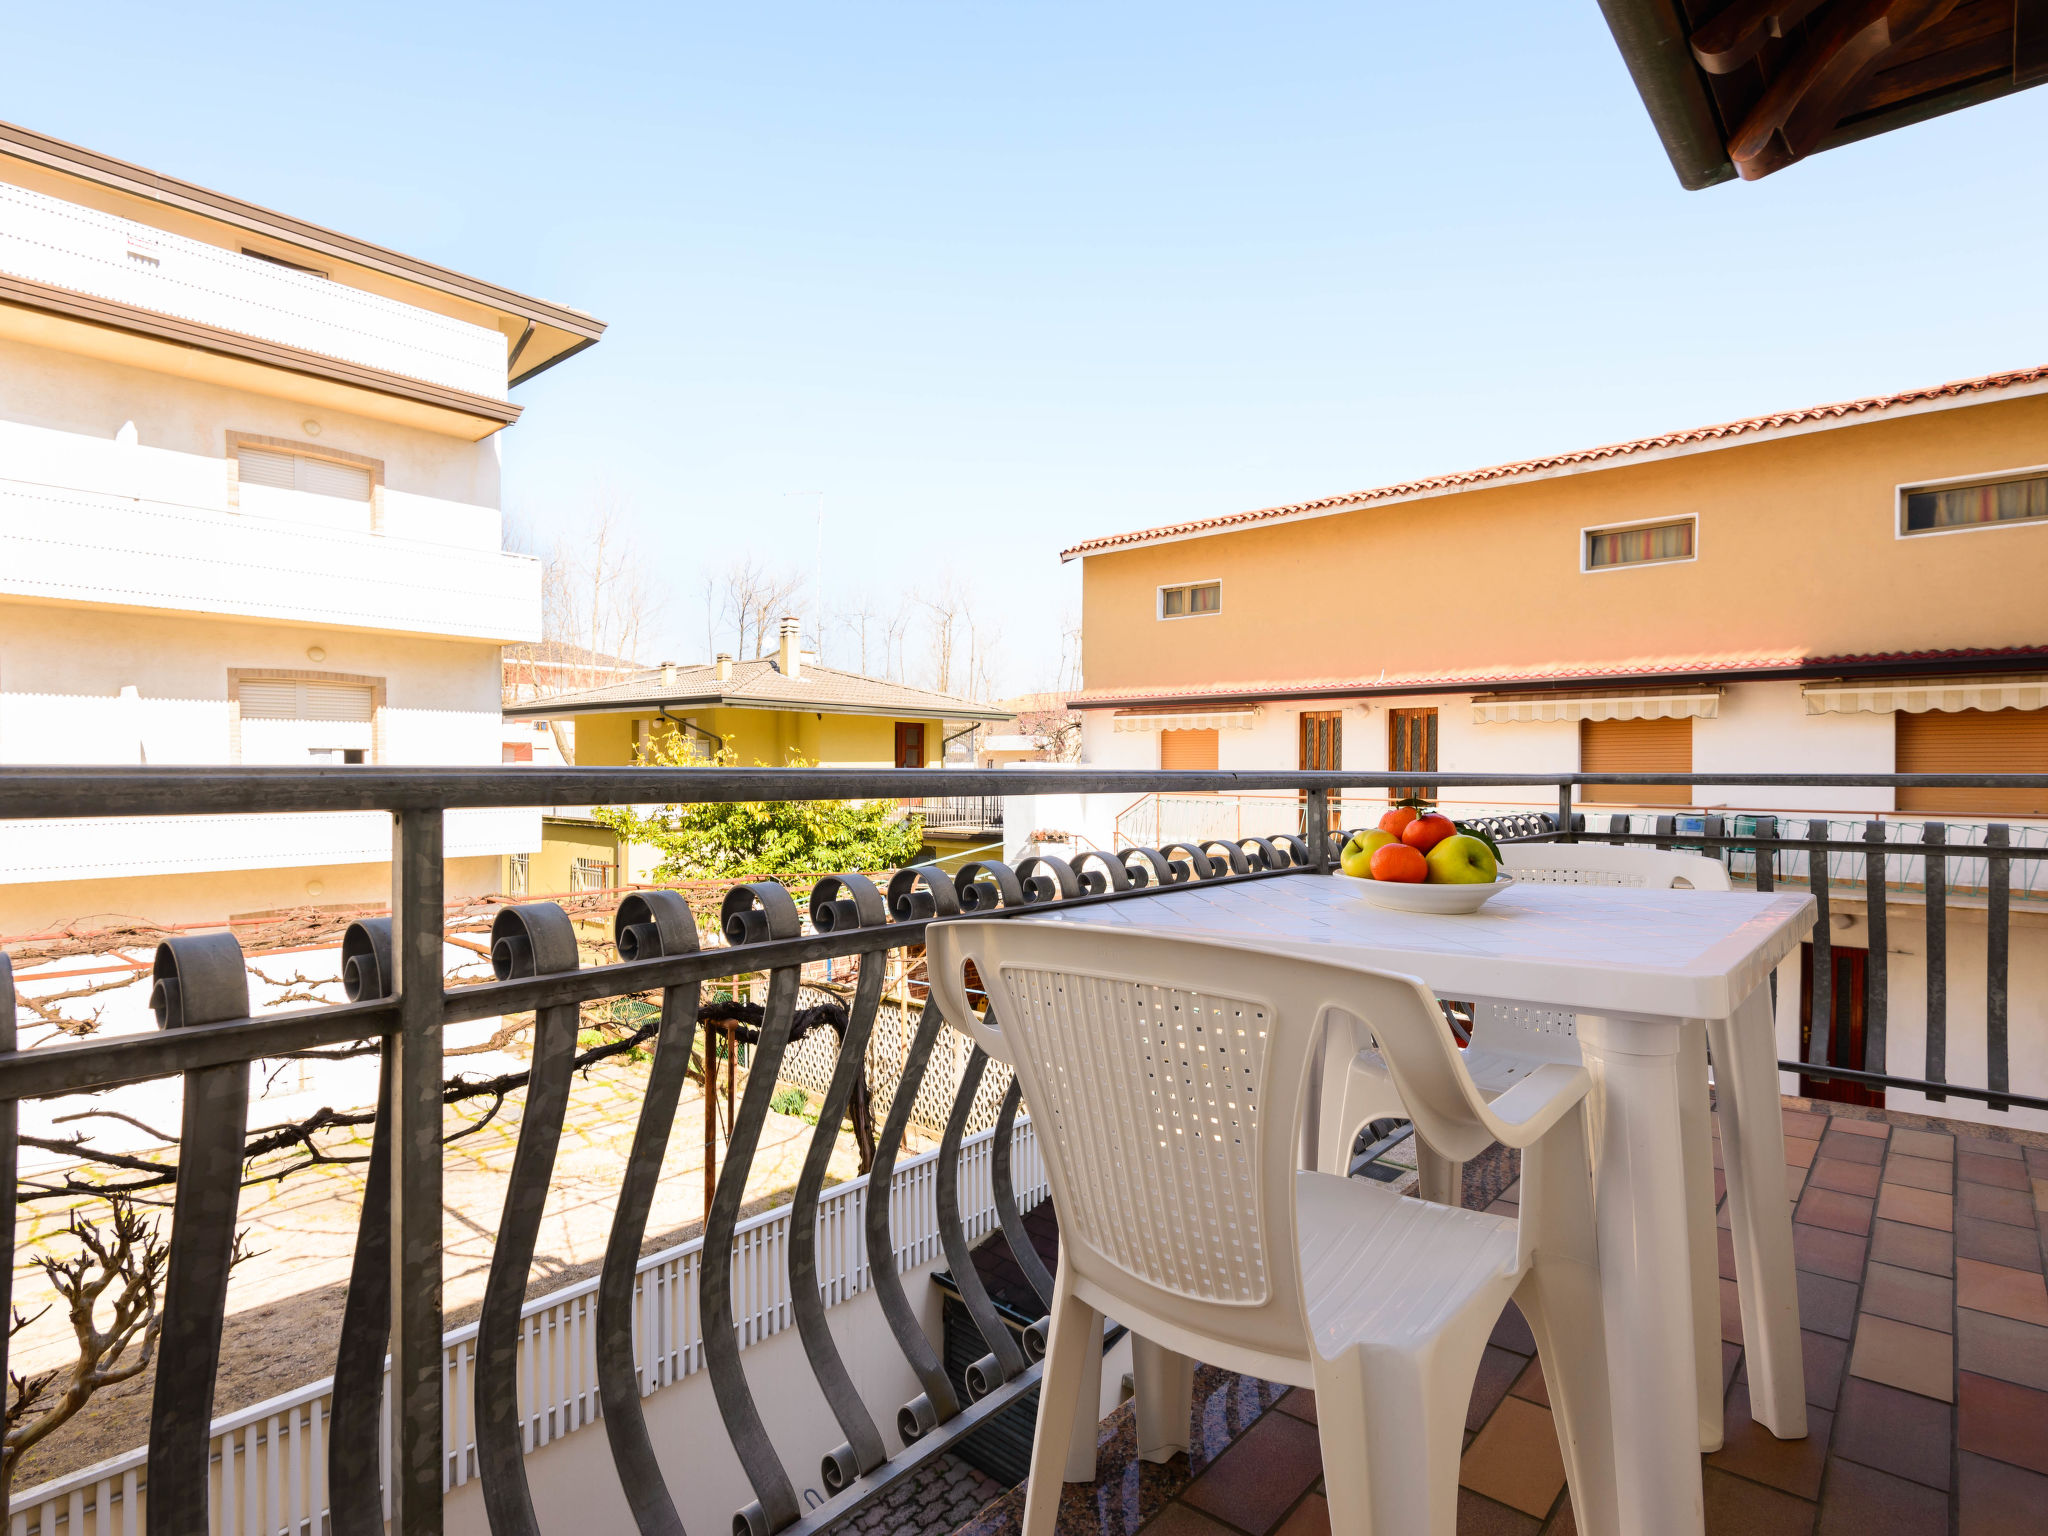 Photo 2 - Appartement de 1 chambre à Lignano Sabbiadoro avec terrasse et vues à la mer